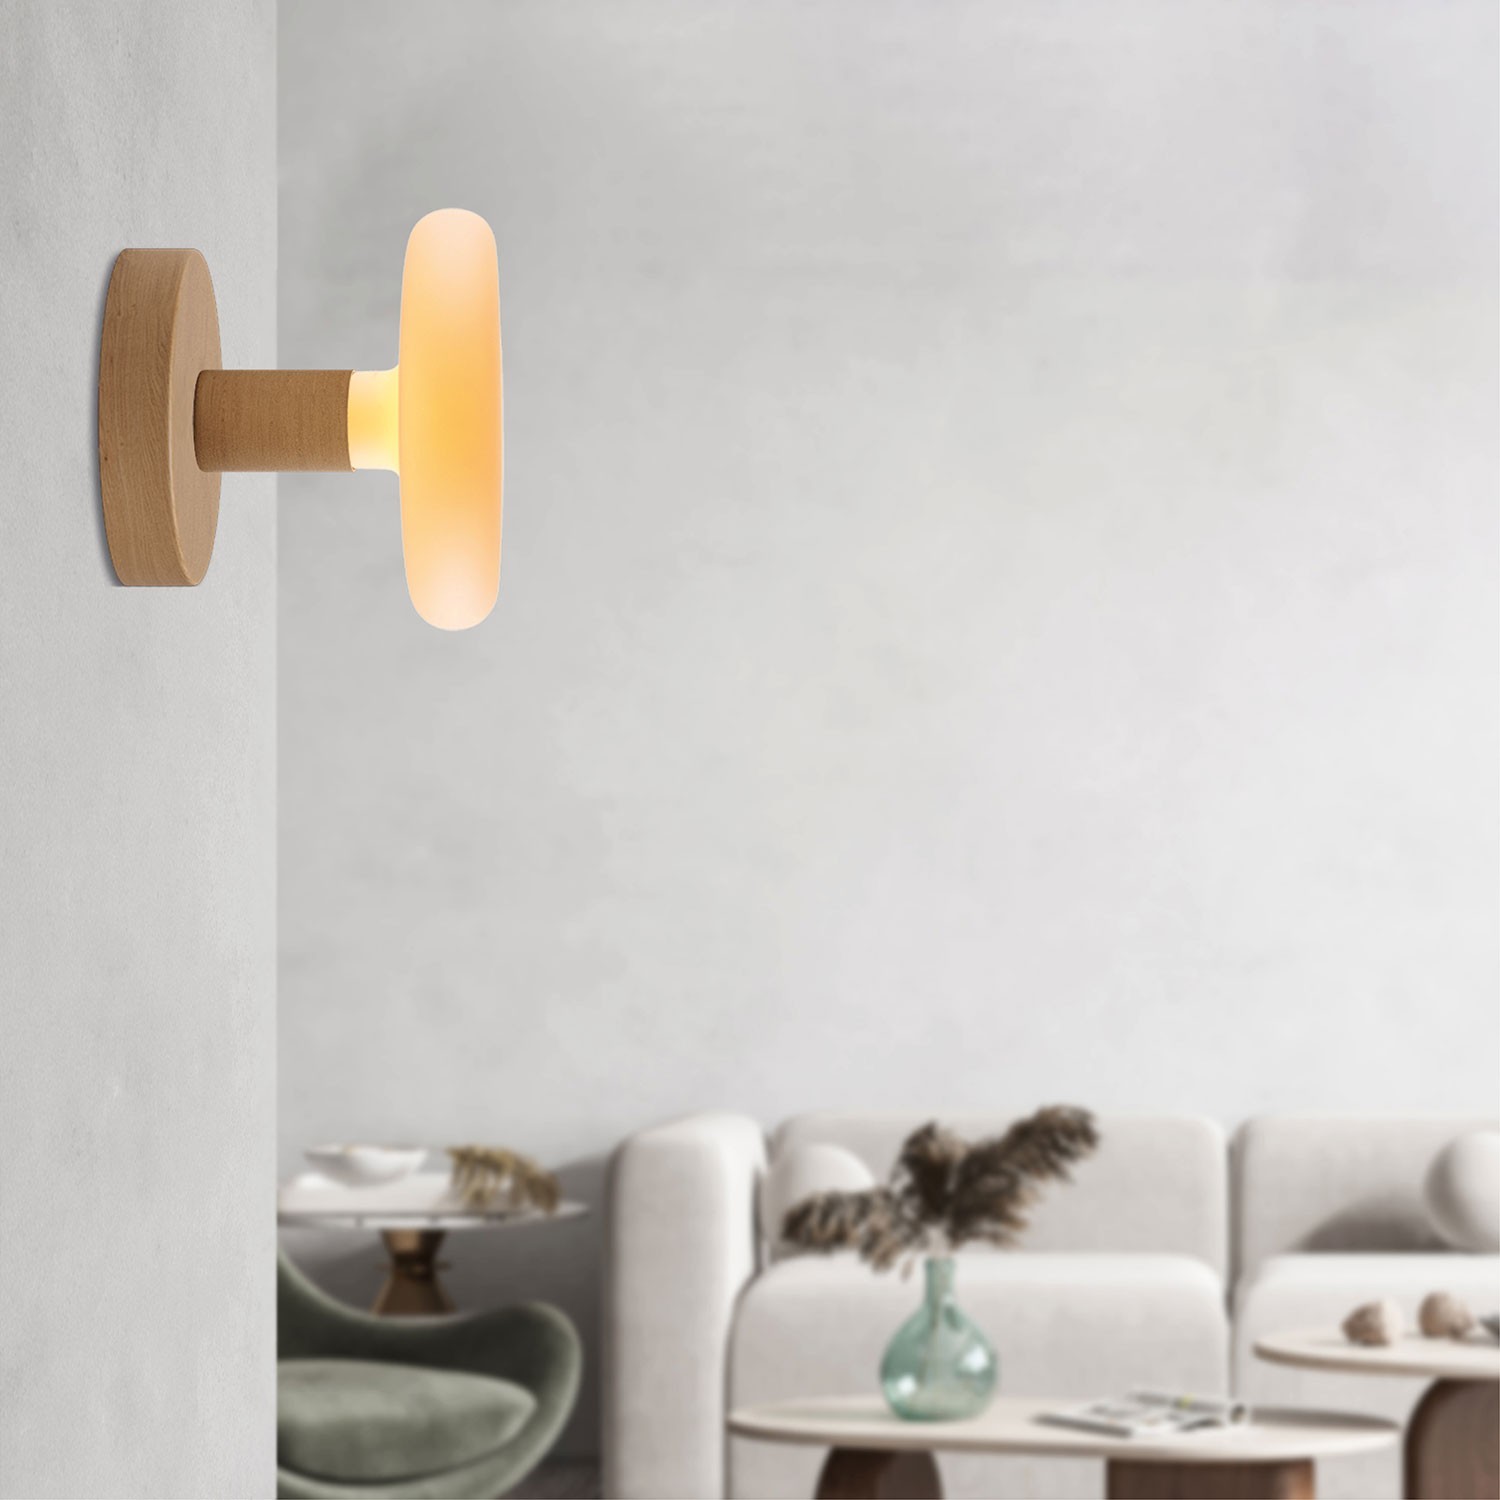 Lampada Fermaluce in legno con lampadina Dash